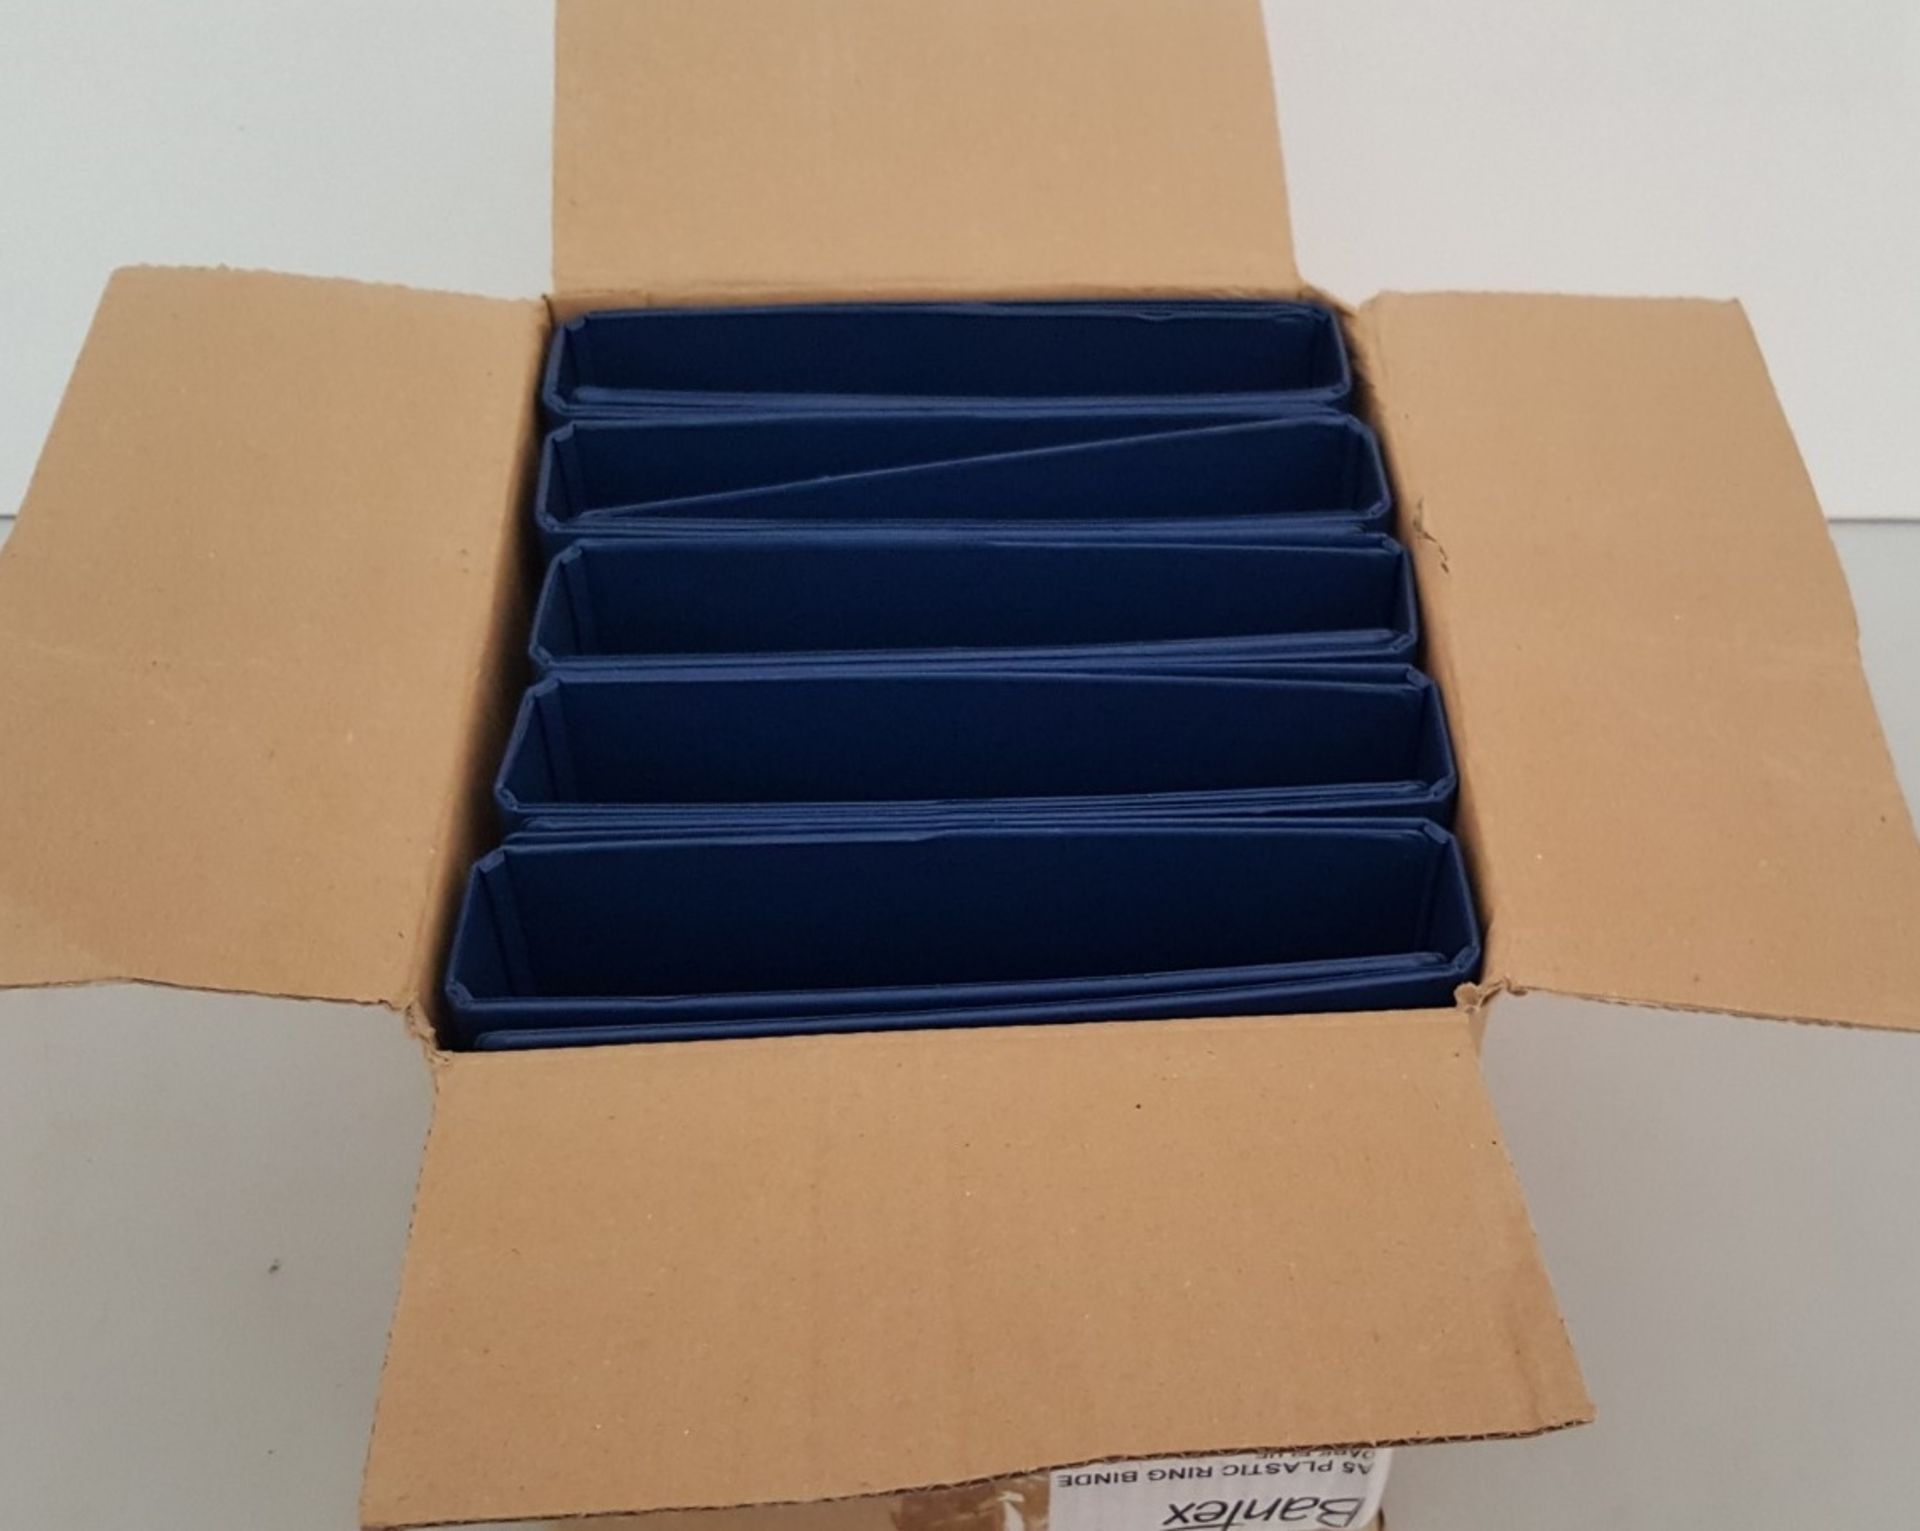 6 x A5 Plastic Ring Binders Dark Blue Box Of 10 - Ref RC119 - CL011 - Location: Altrincham WA14 - Image 2 of 5